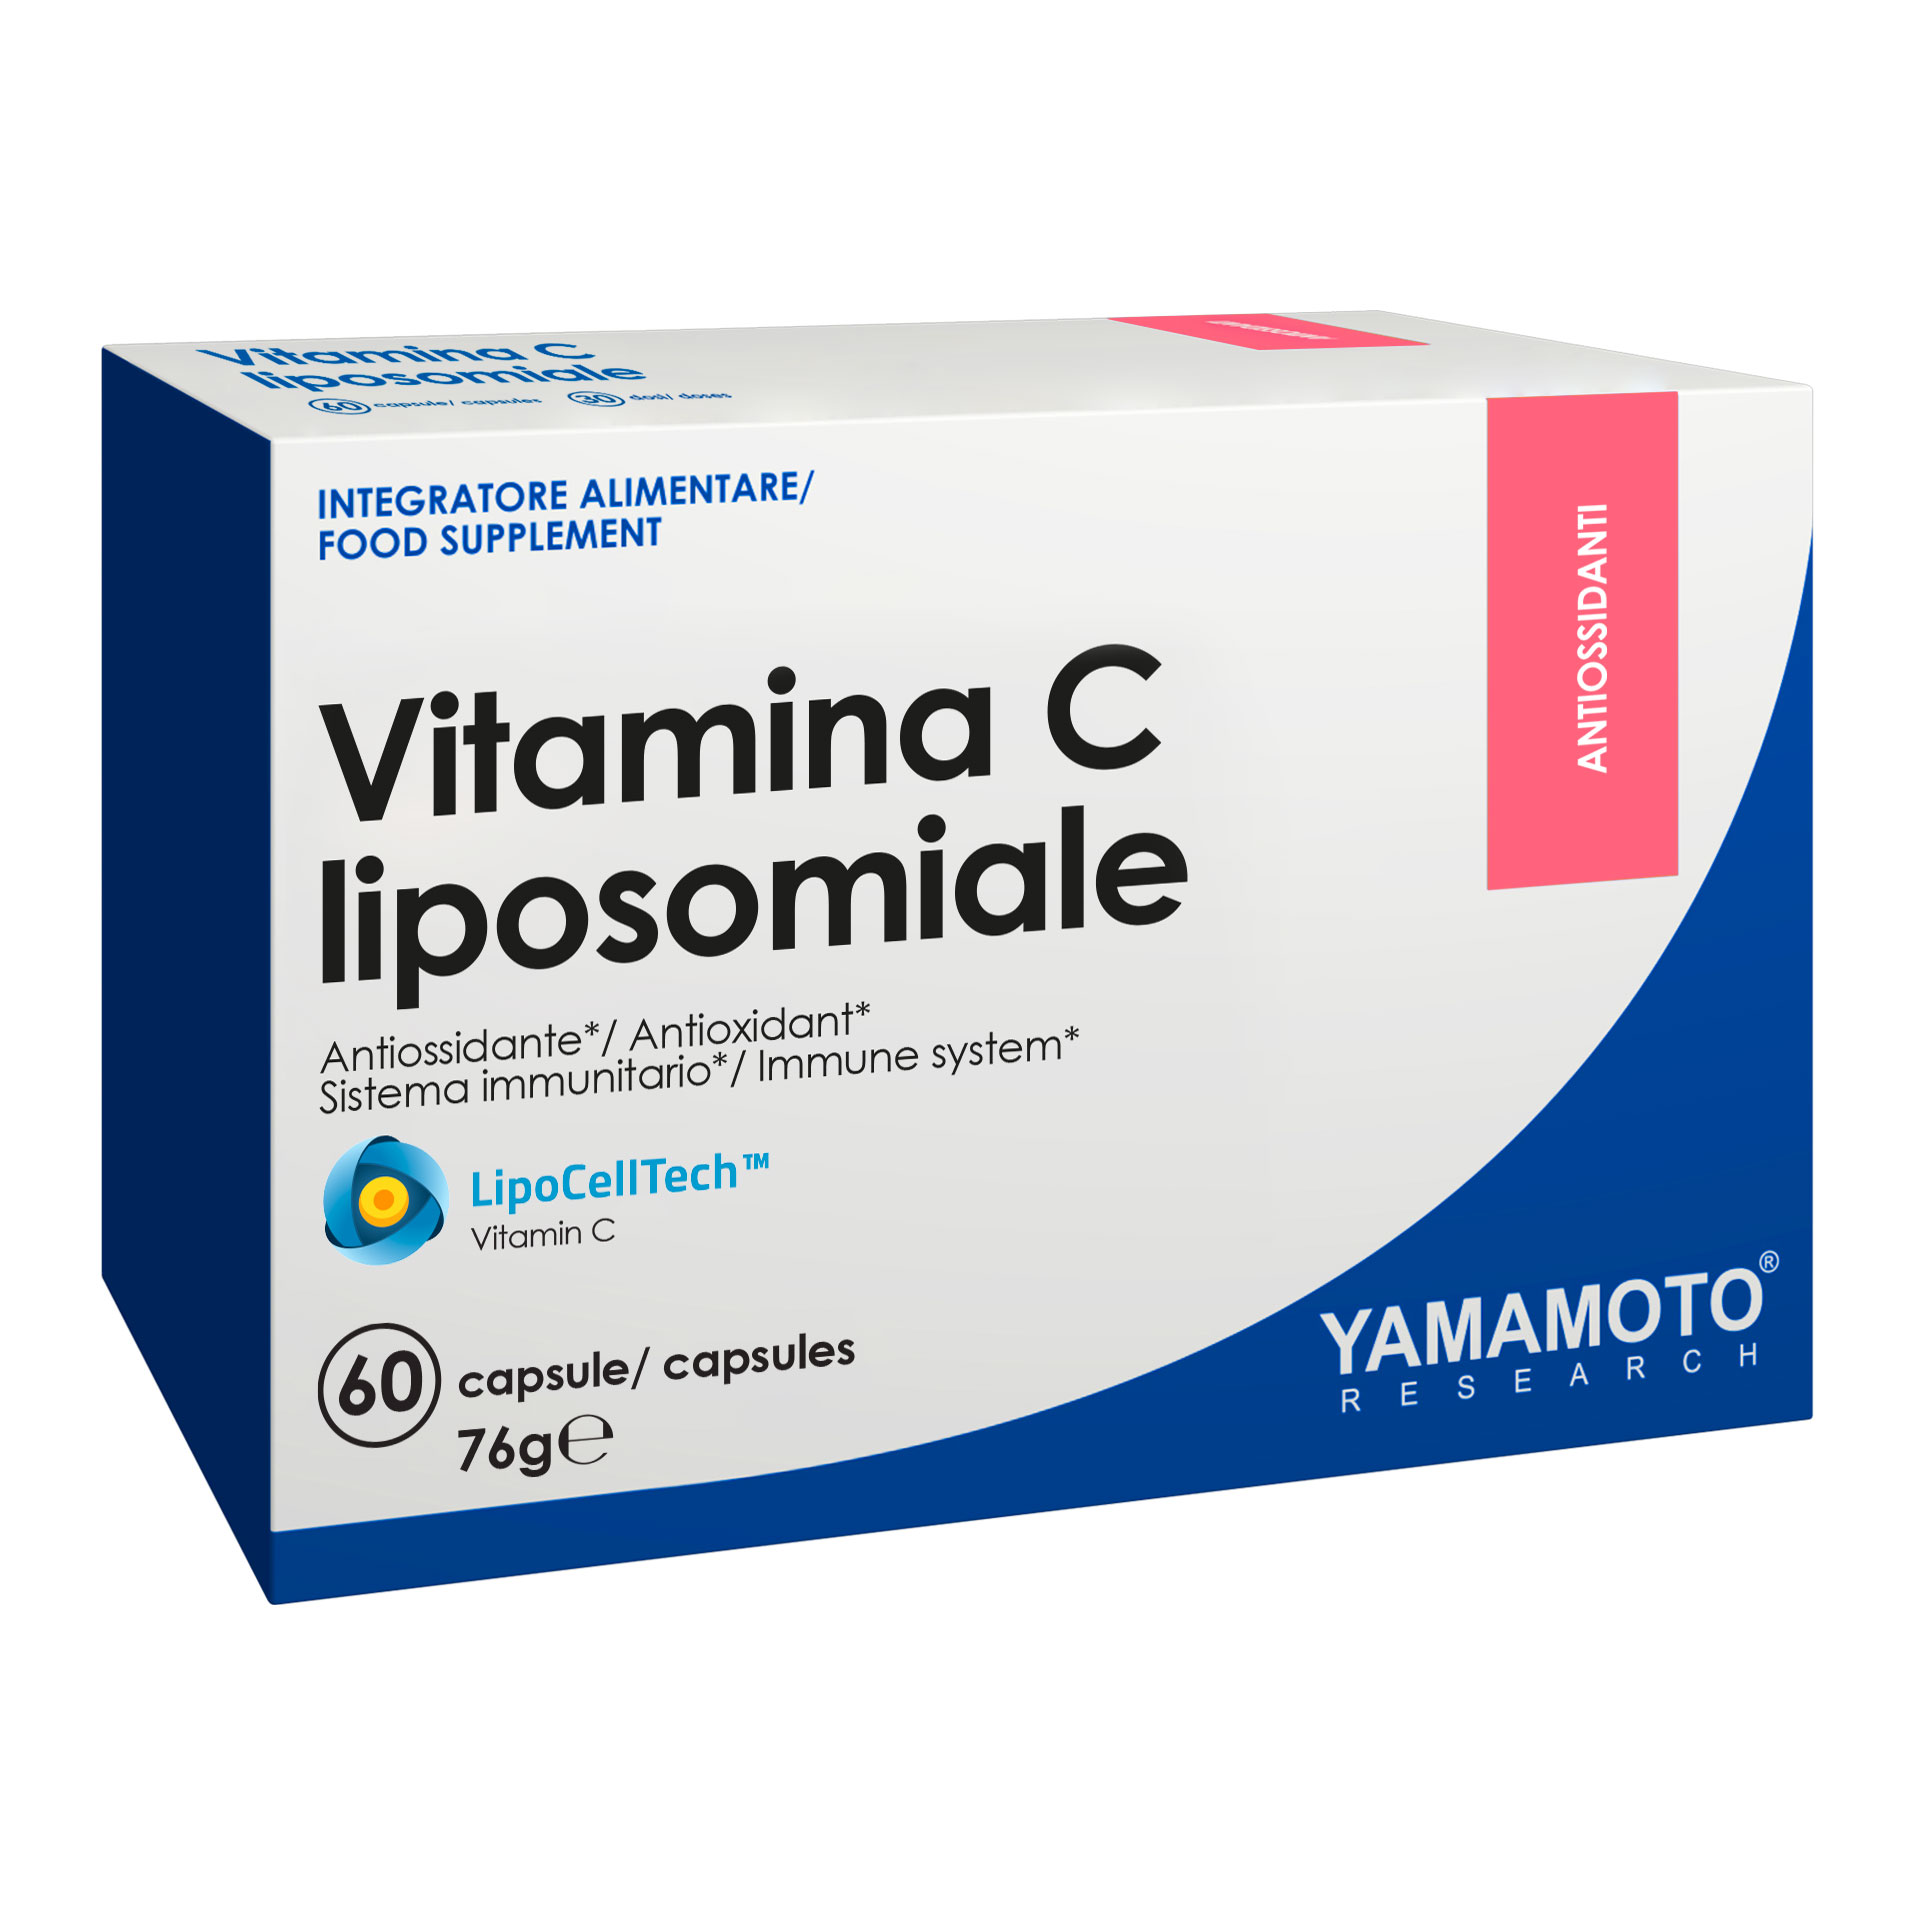 Vitamiona C Liposomiale, капсулы 60 шт.